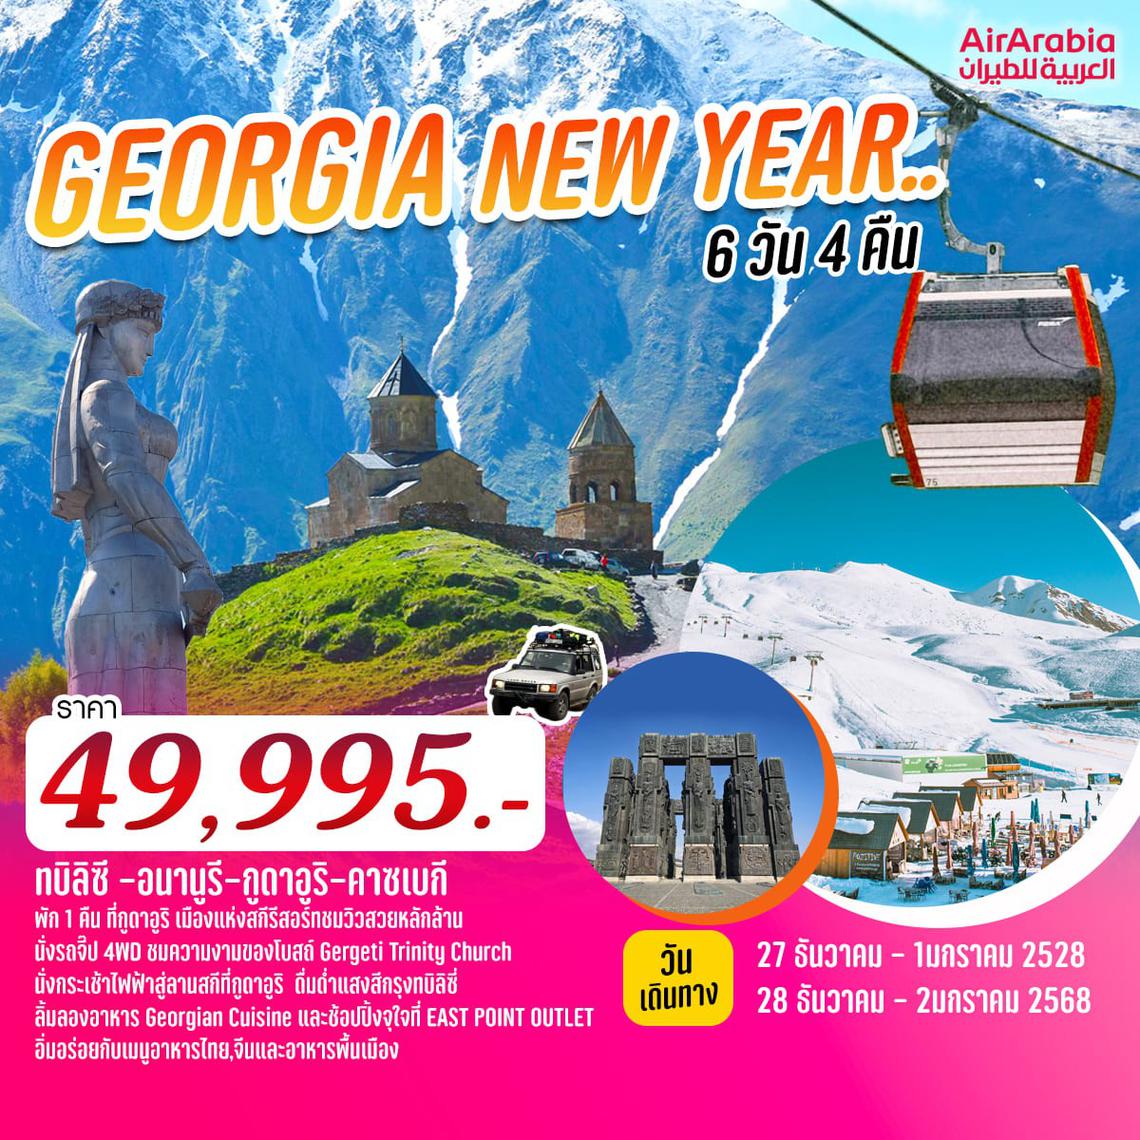 GEORGIA NEW YEAR 6D 9N โดยสายการบิน AirArabia (G9)